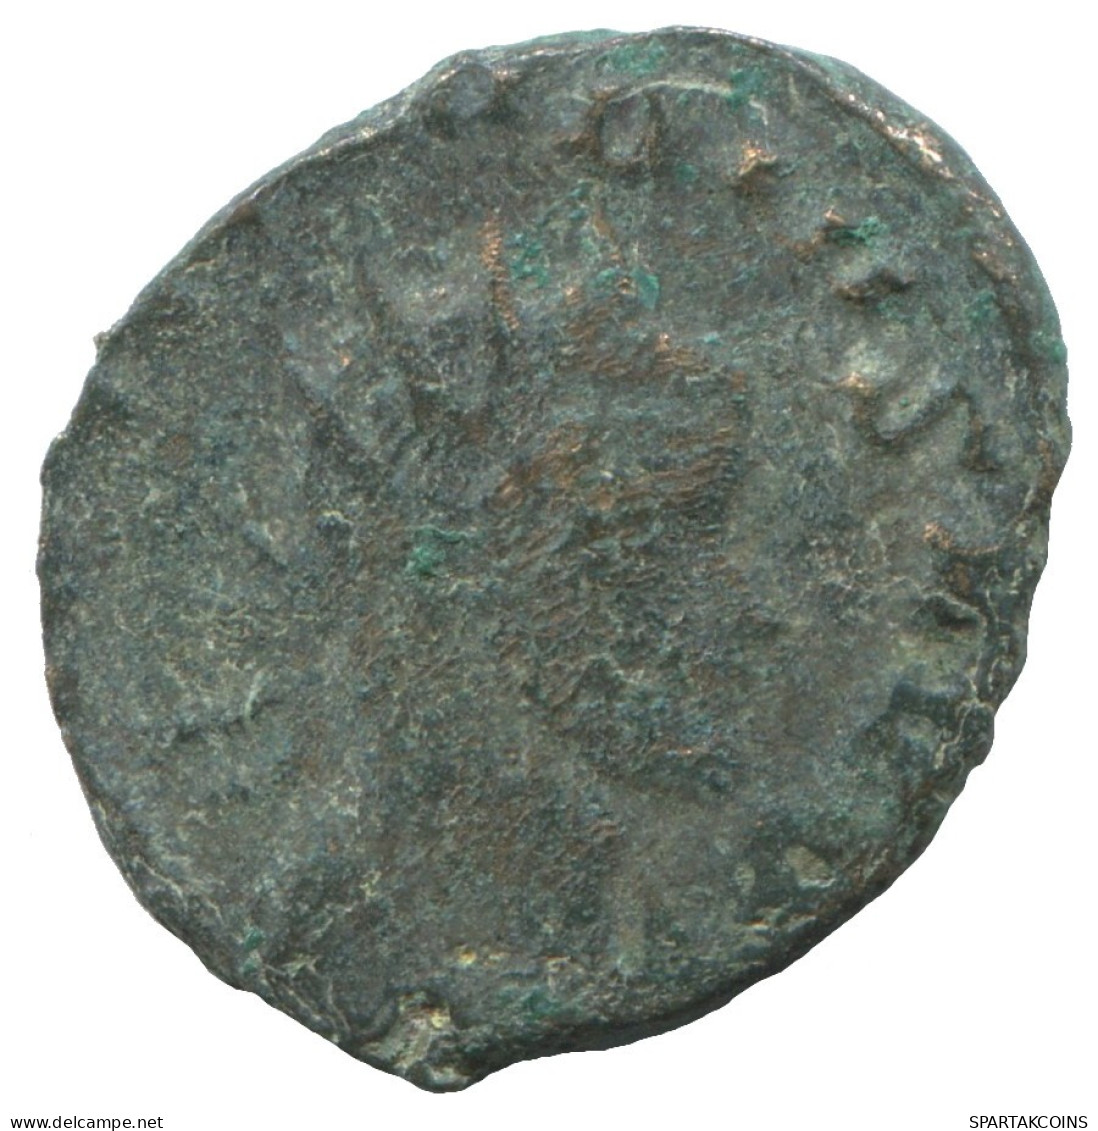 GALLIENUS ROMAN IMPERIO Follis Antiguo Moneda 2.8g/19mm #SAV1148.9.E.A - La Crisi Militare (235 / 284)